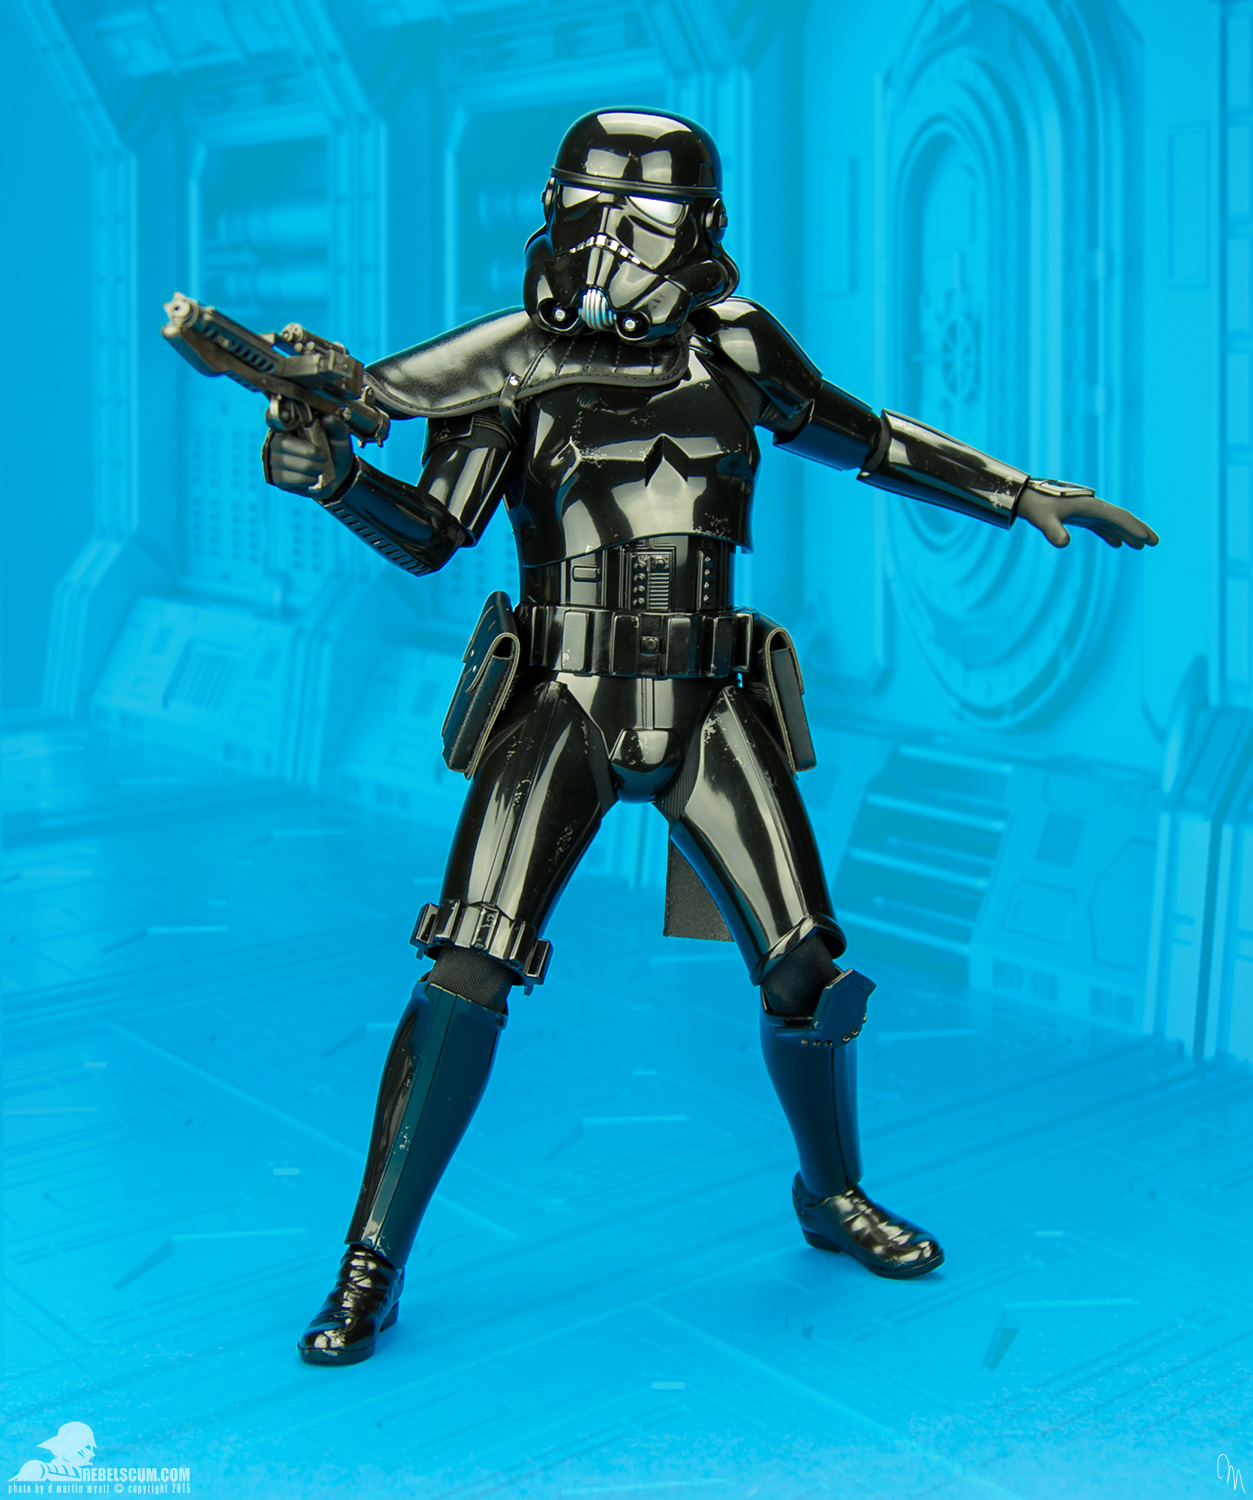 MMS271-Shadow-trooper-Hot-Toys-Star-Wars-figure-018.jpg